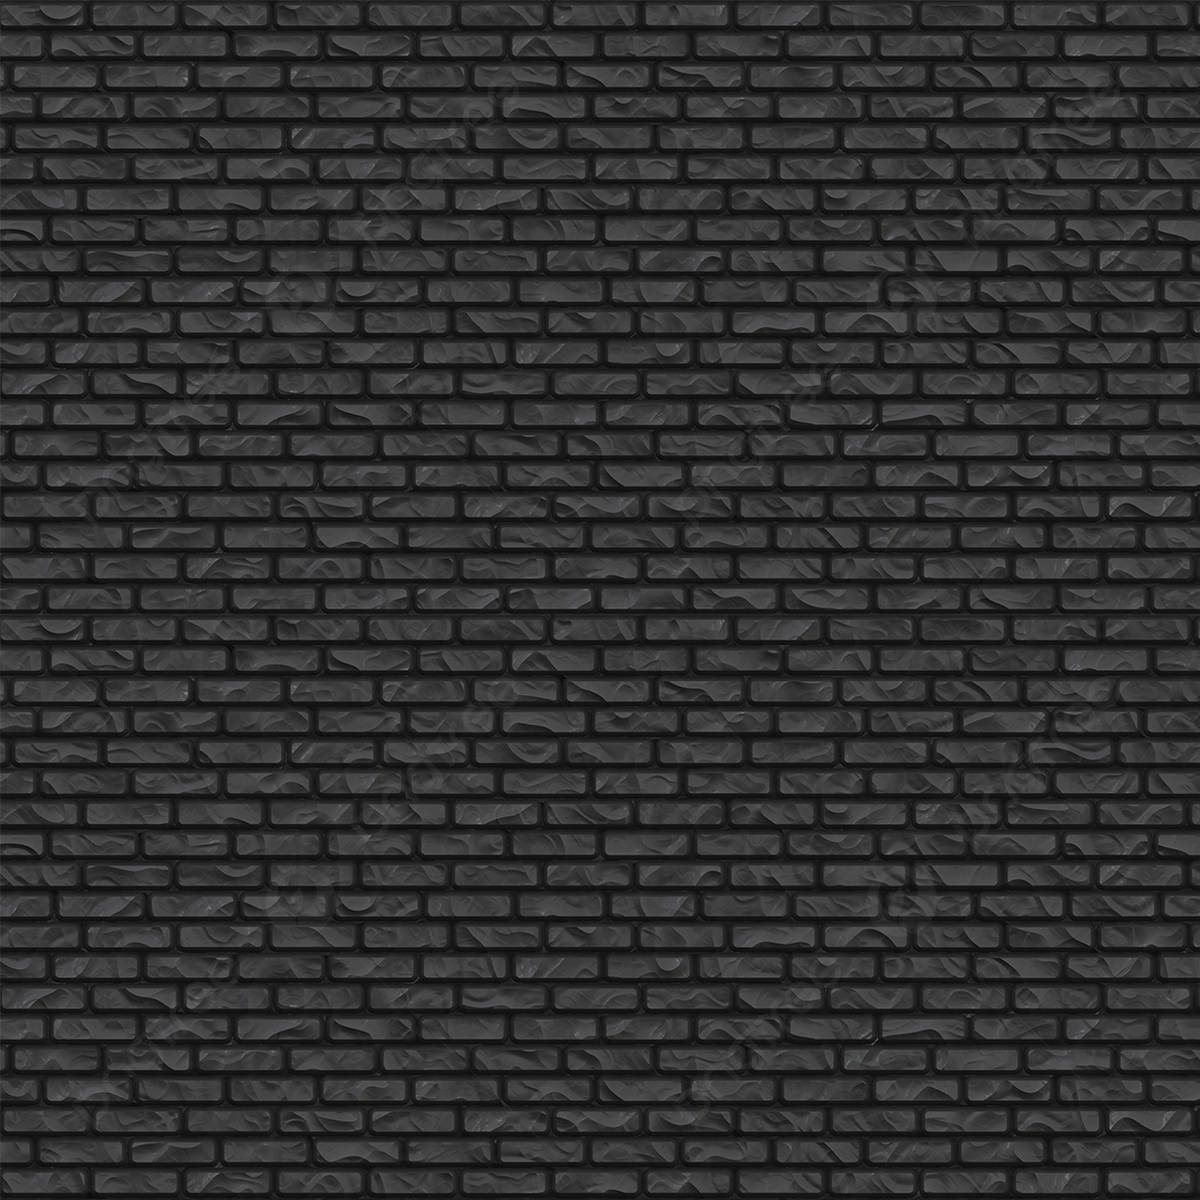 Black Brick Texture With Crumpled Design Wallpaper